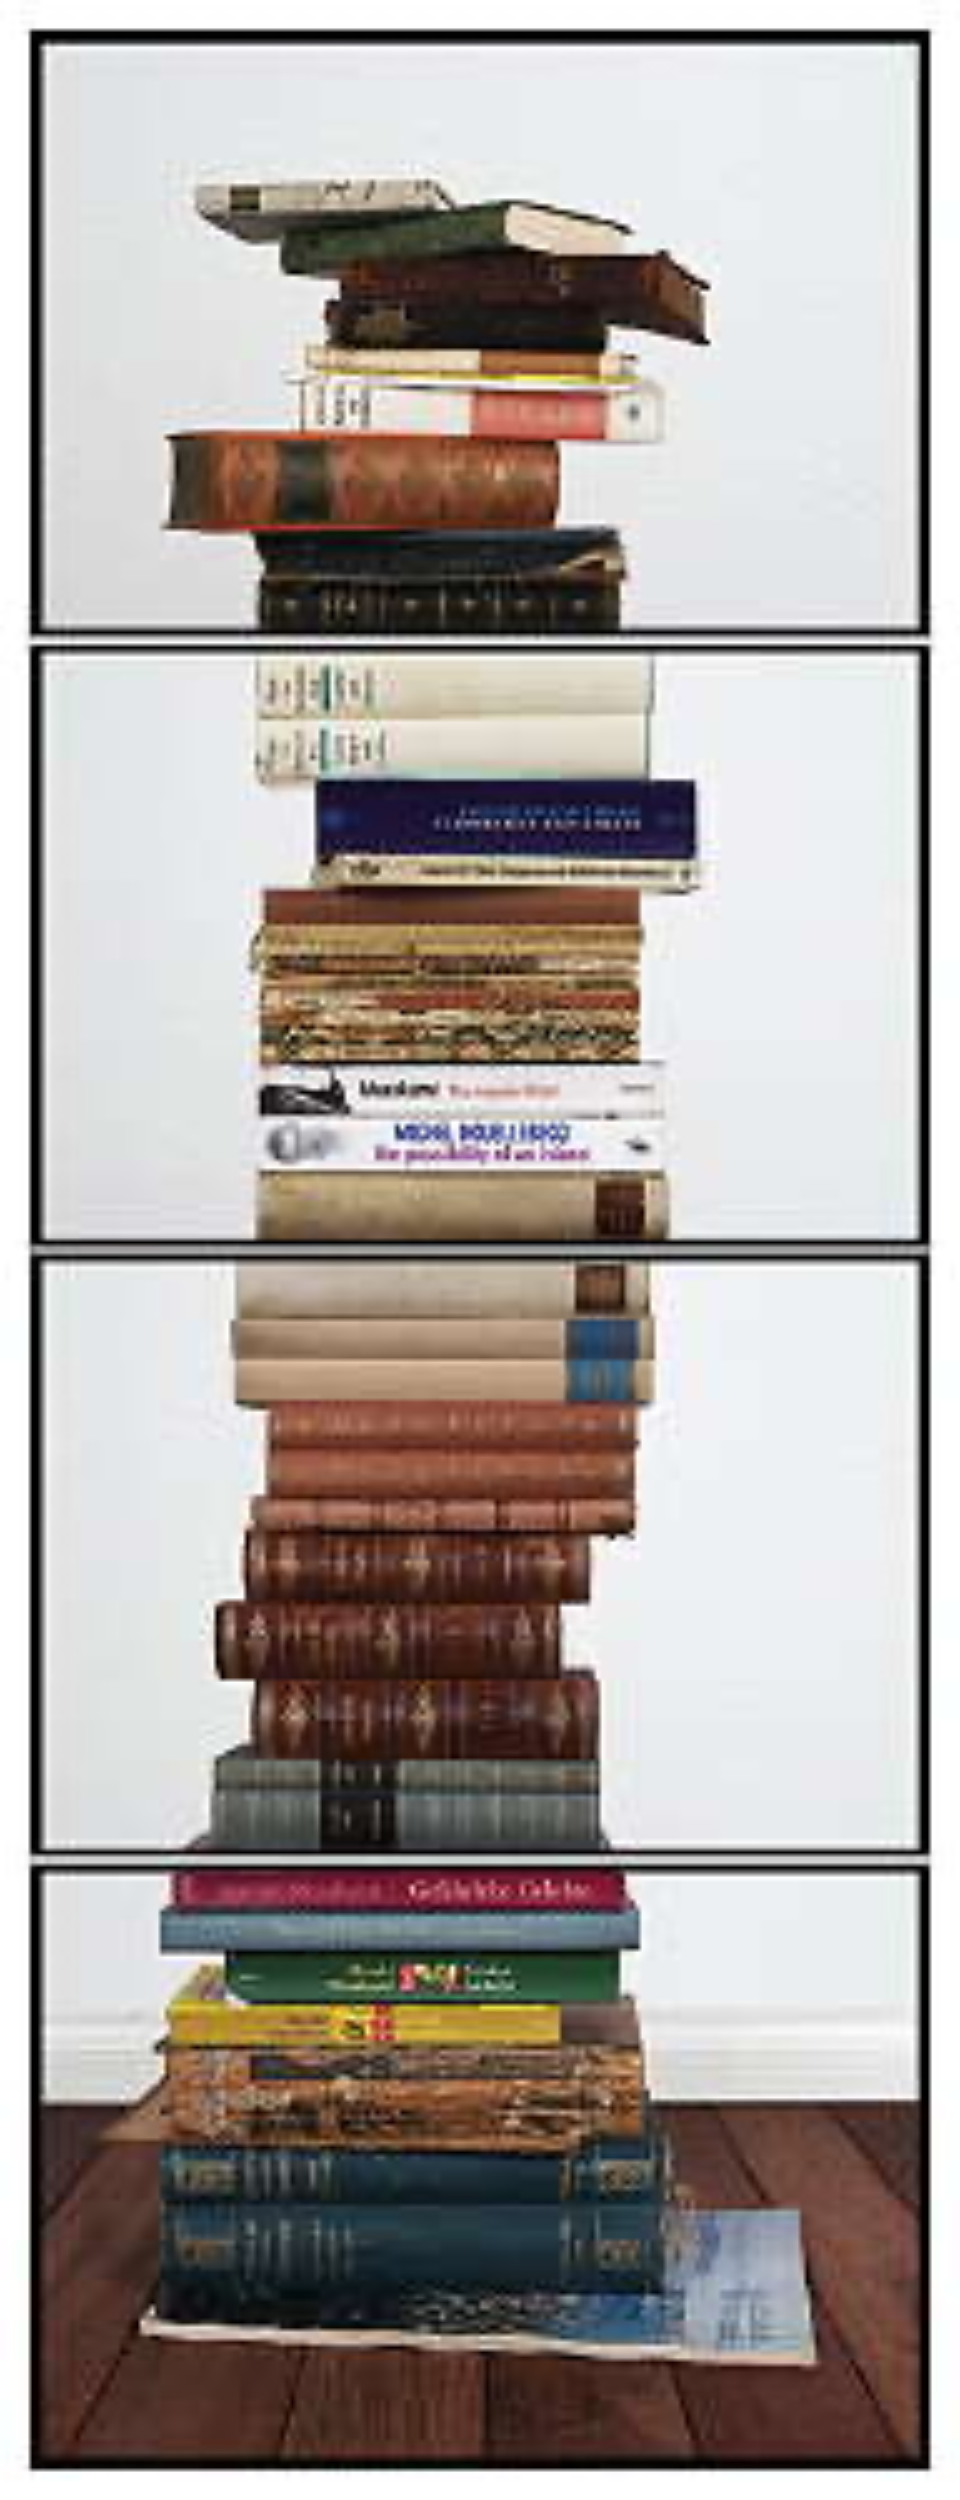 Joachim Froese: Critical Mass #7 2008 4 archival pigment inkjet prints 124 x 46 cm Ed. 12